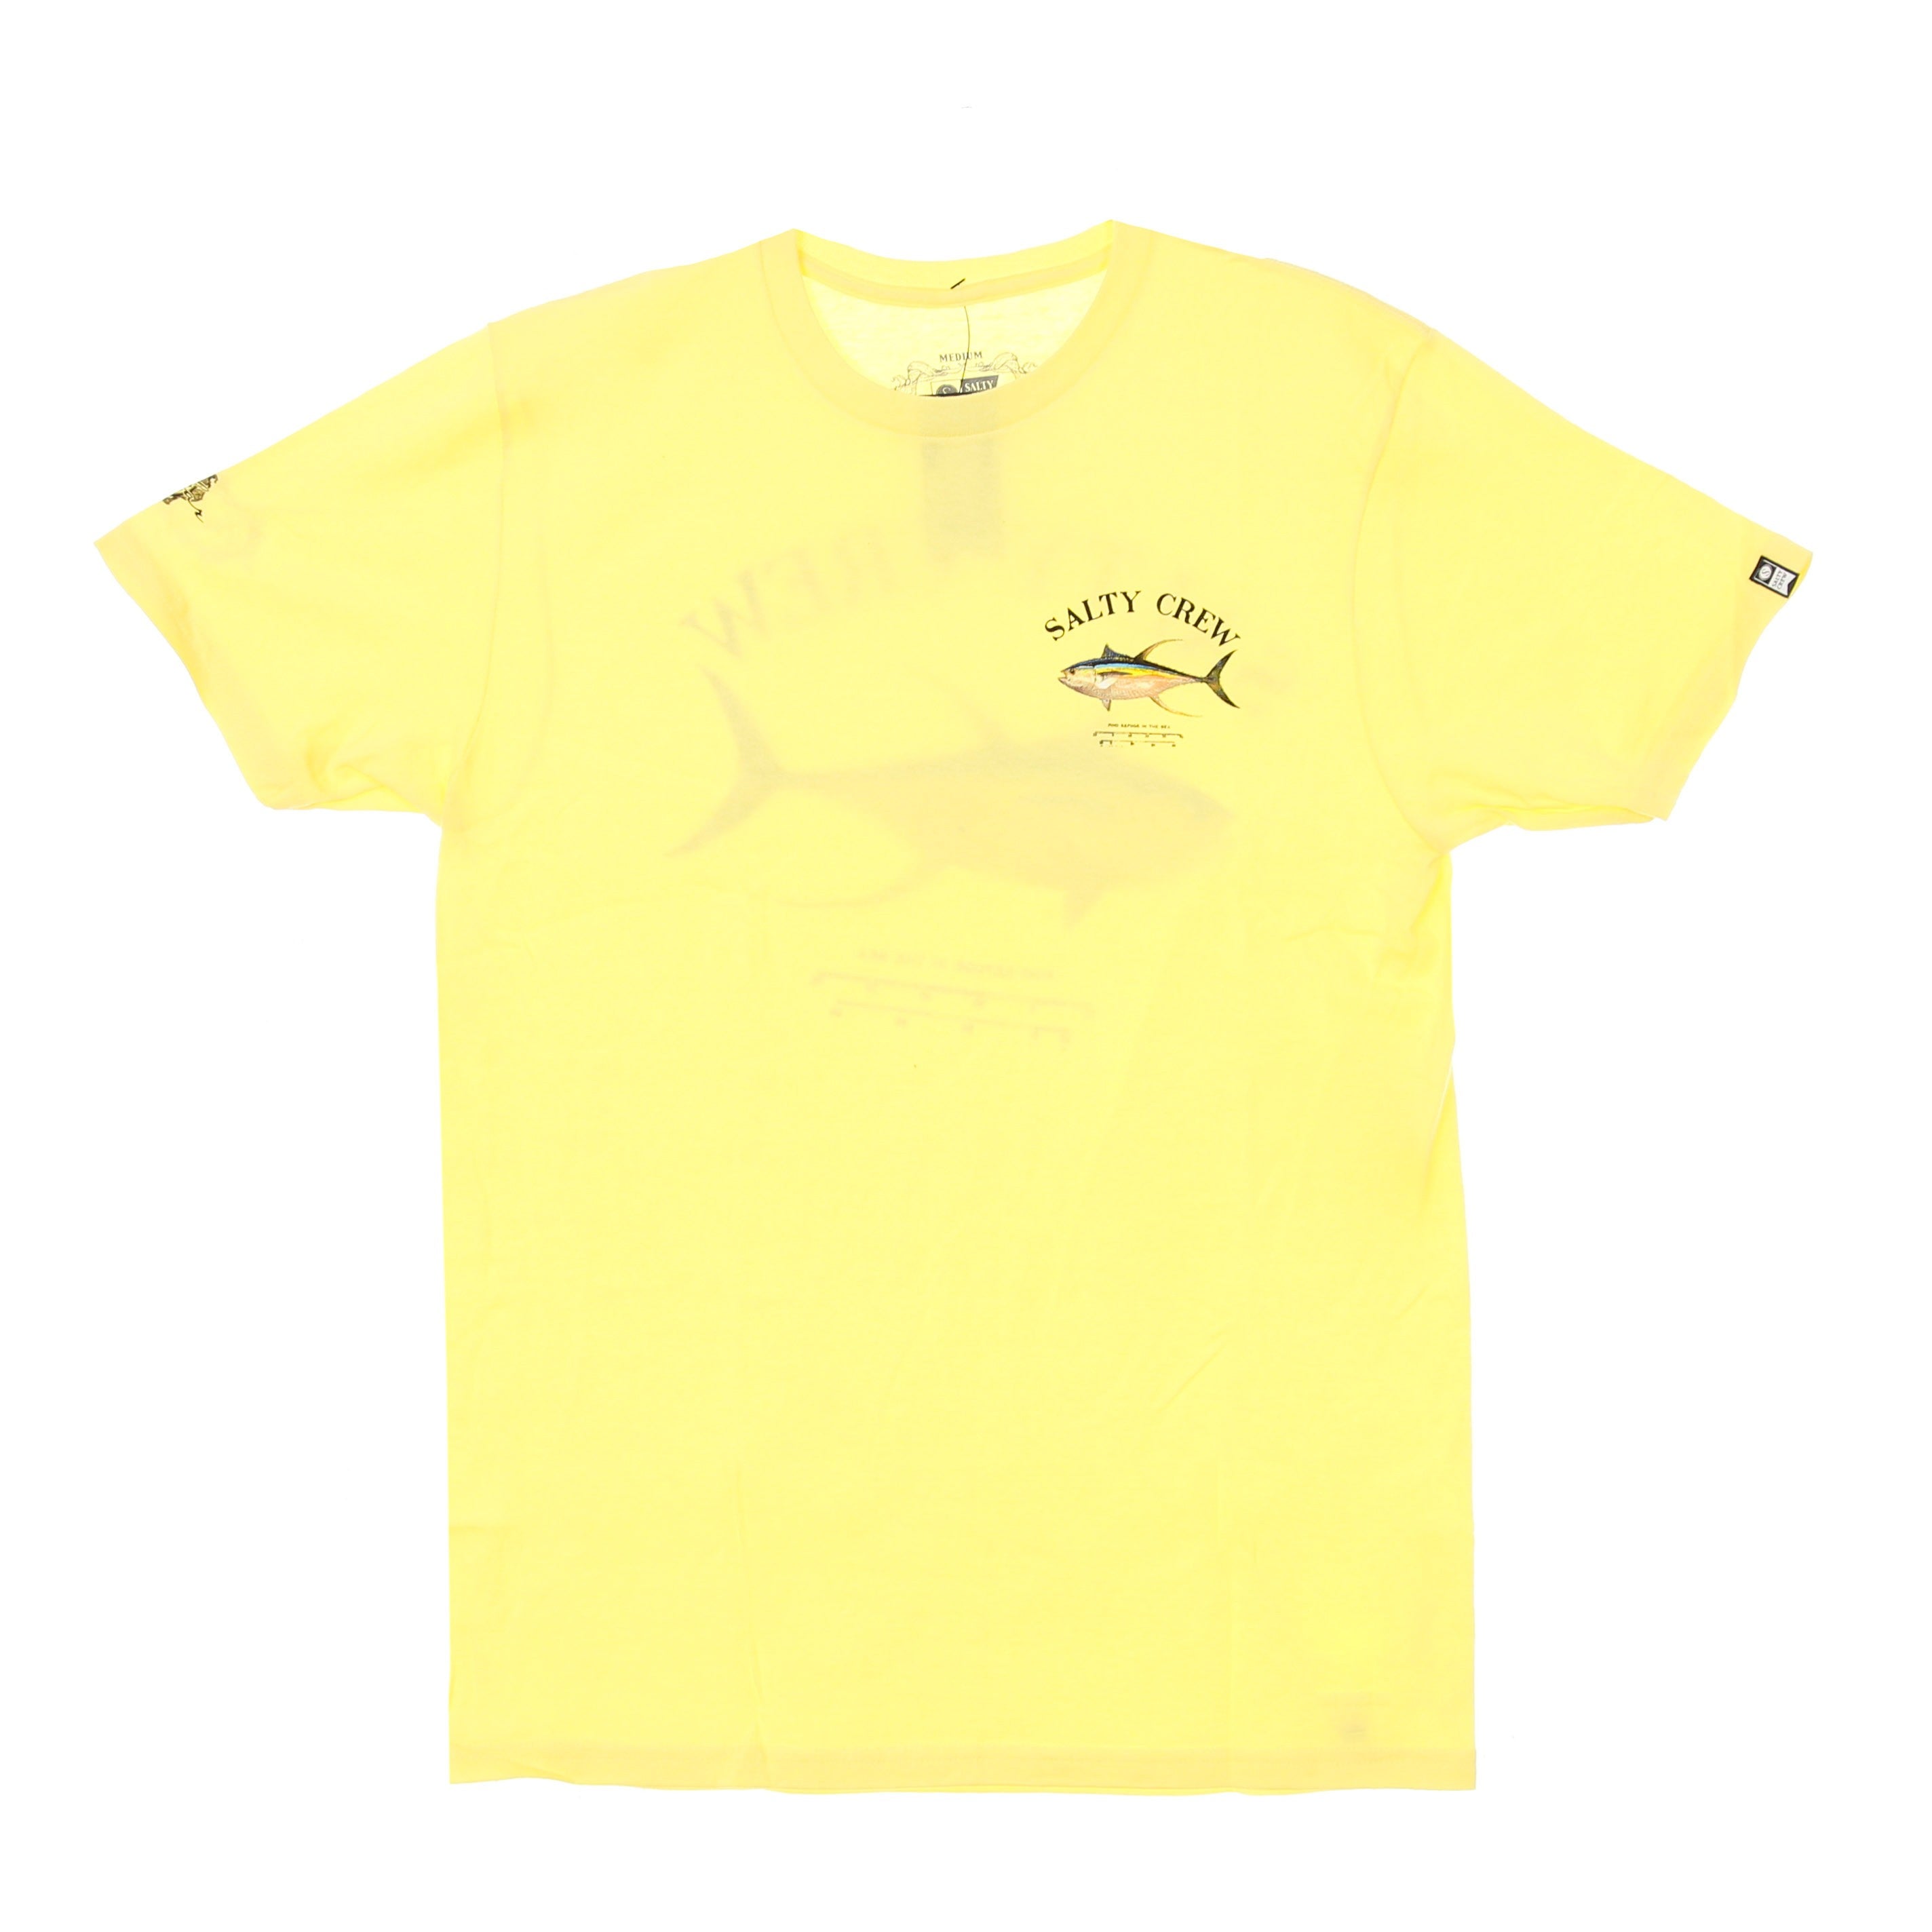 Ahi Mount Tee Banana Men's T-Shirt